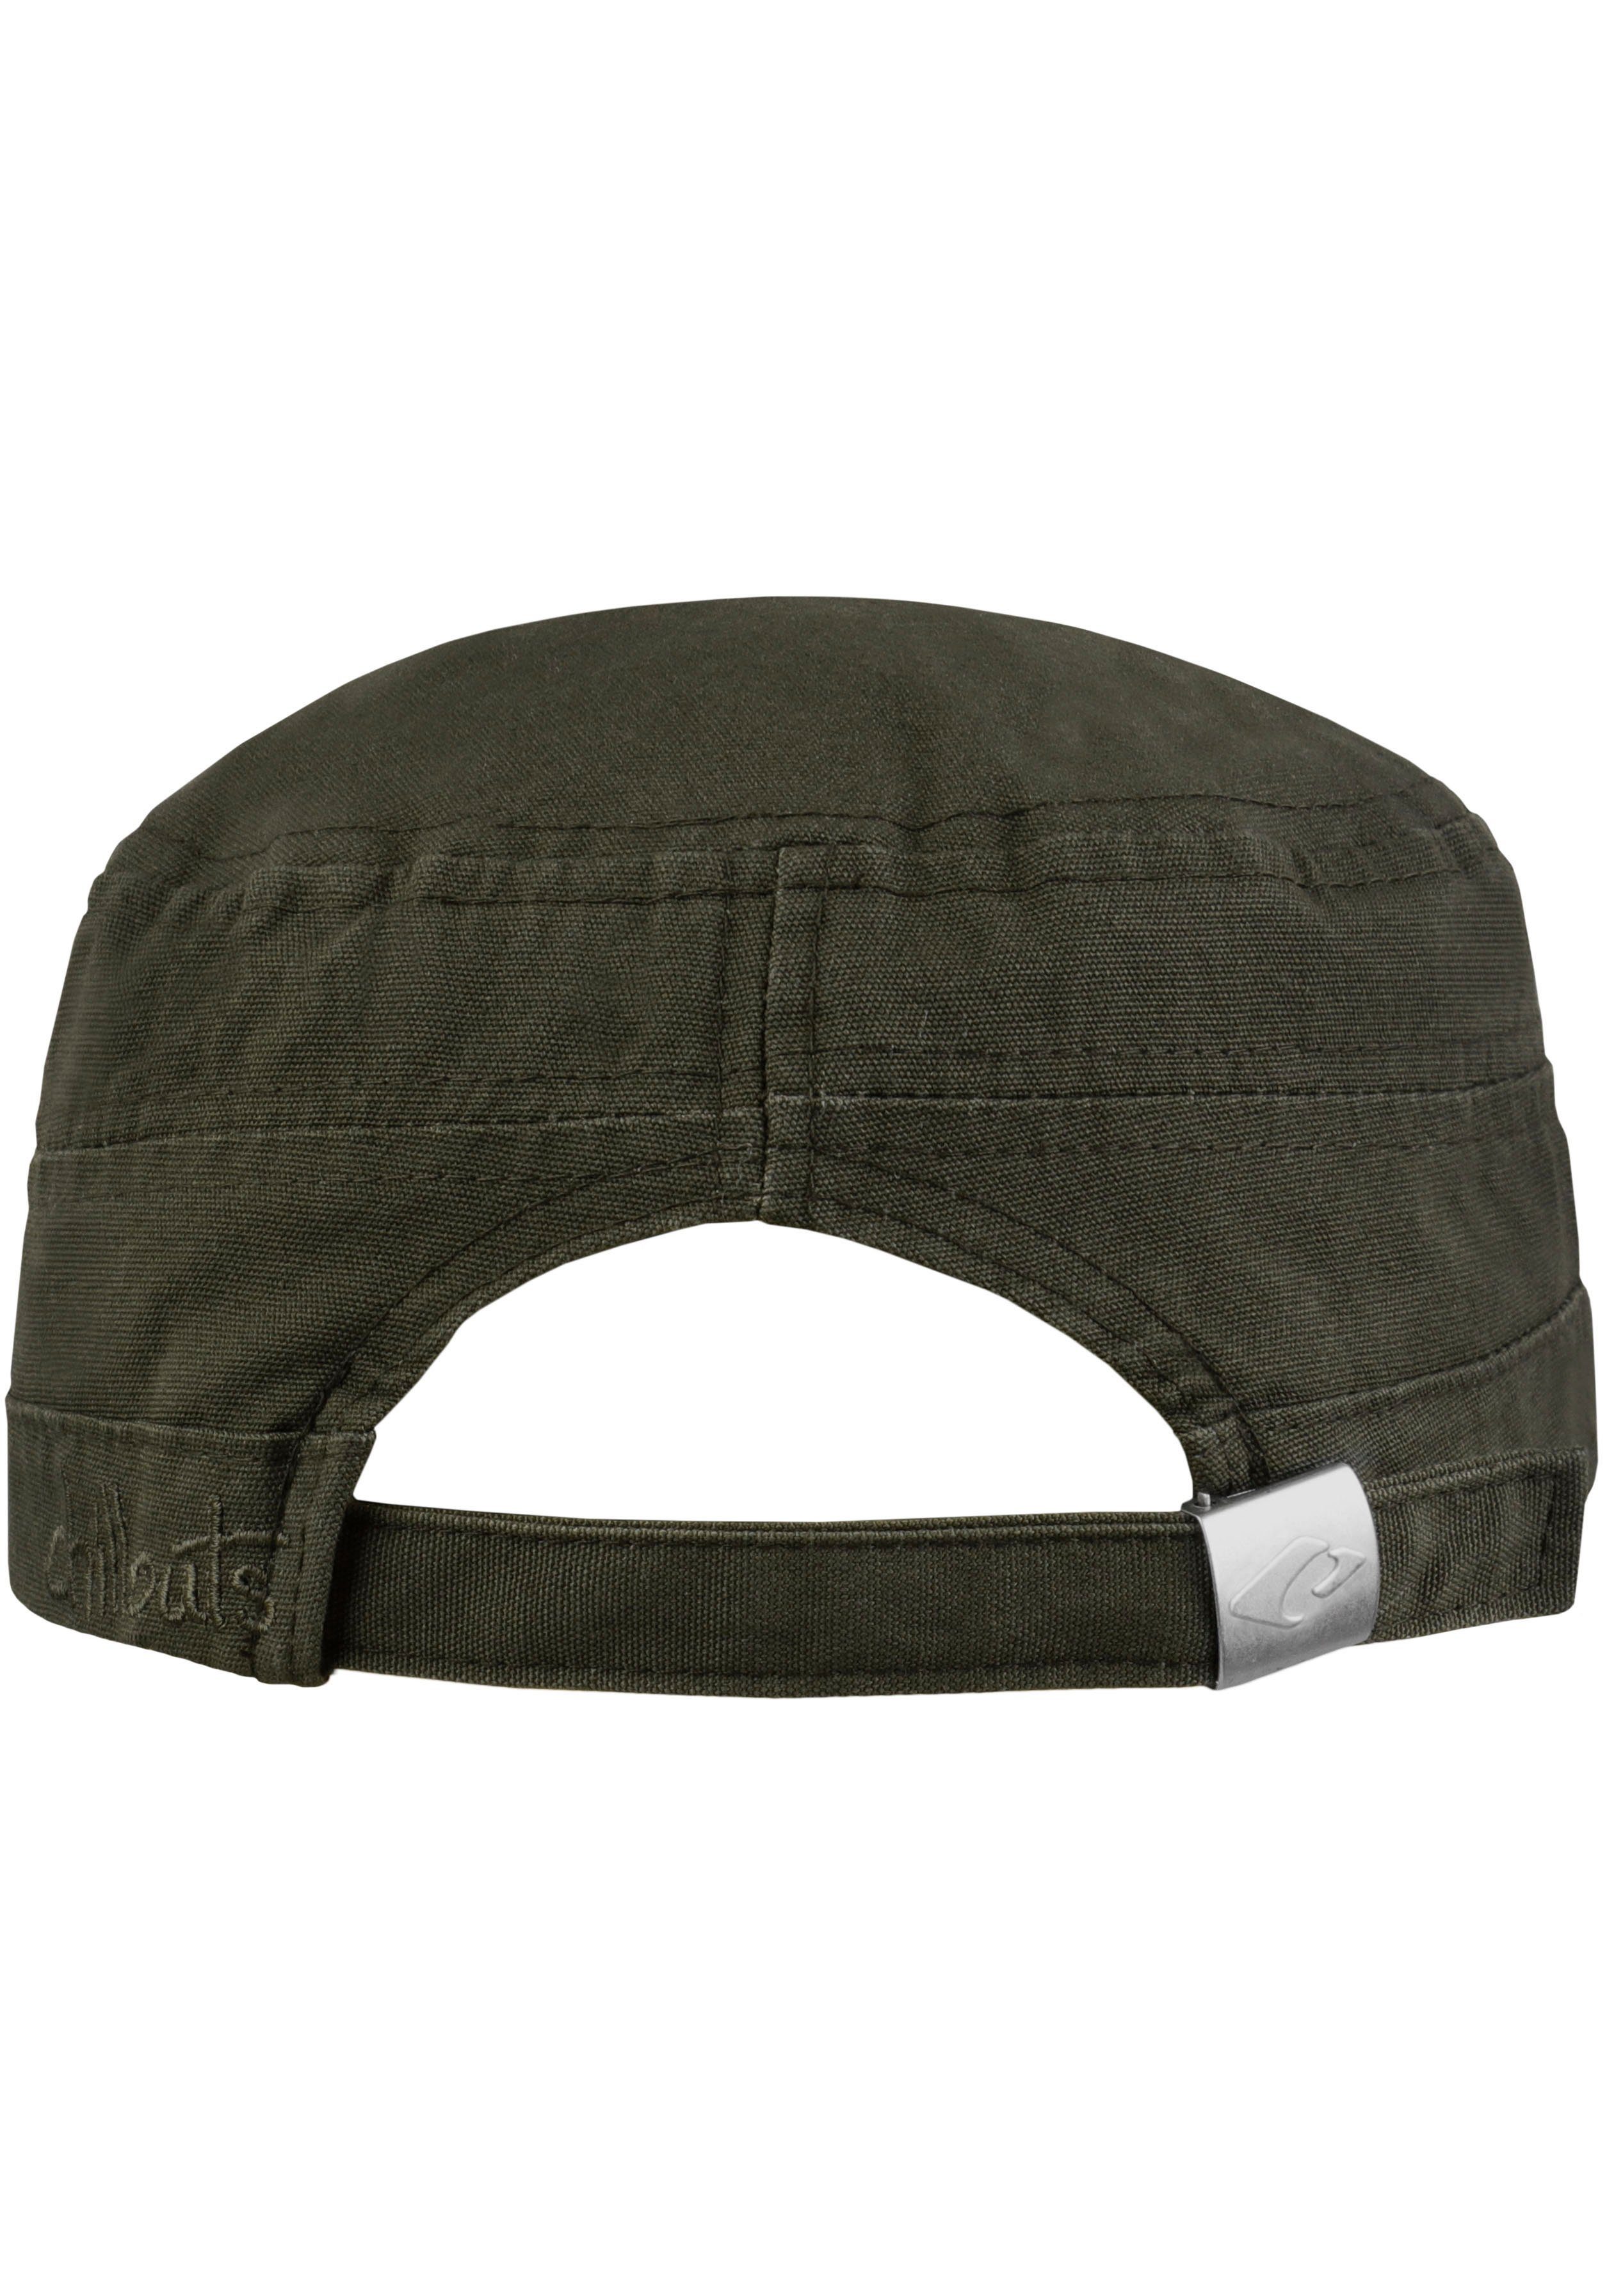 Size Cap Hat Baumwolle, reiner olivgrün El Army Paso atmungsaktiv, aus chillouts One